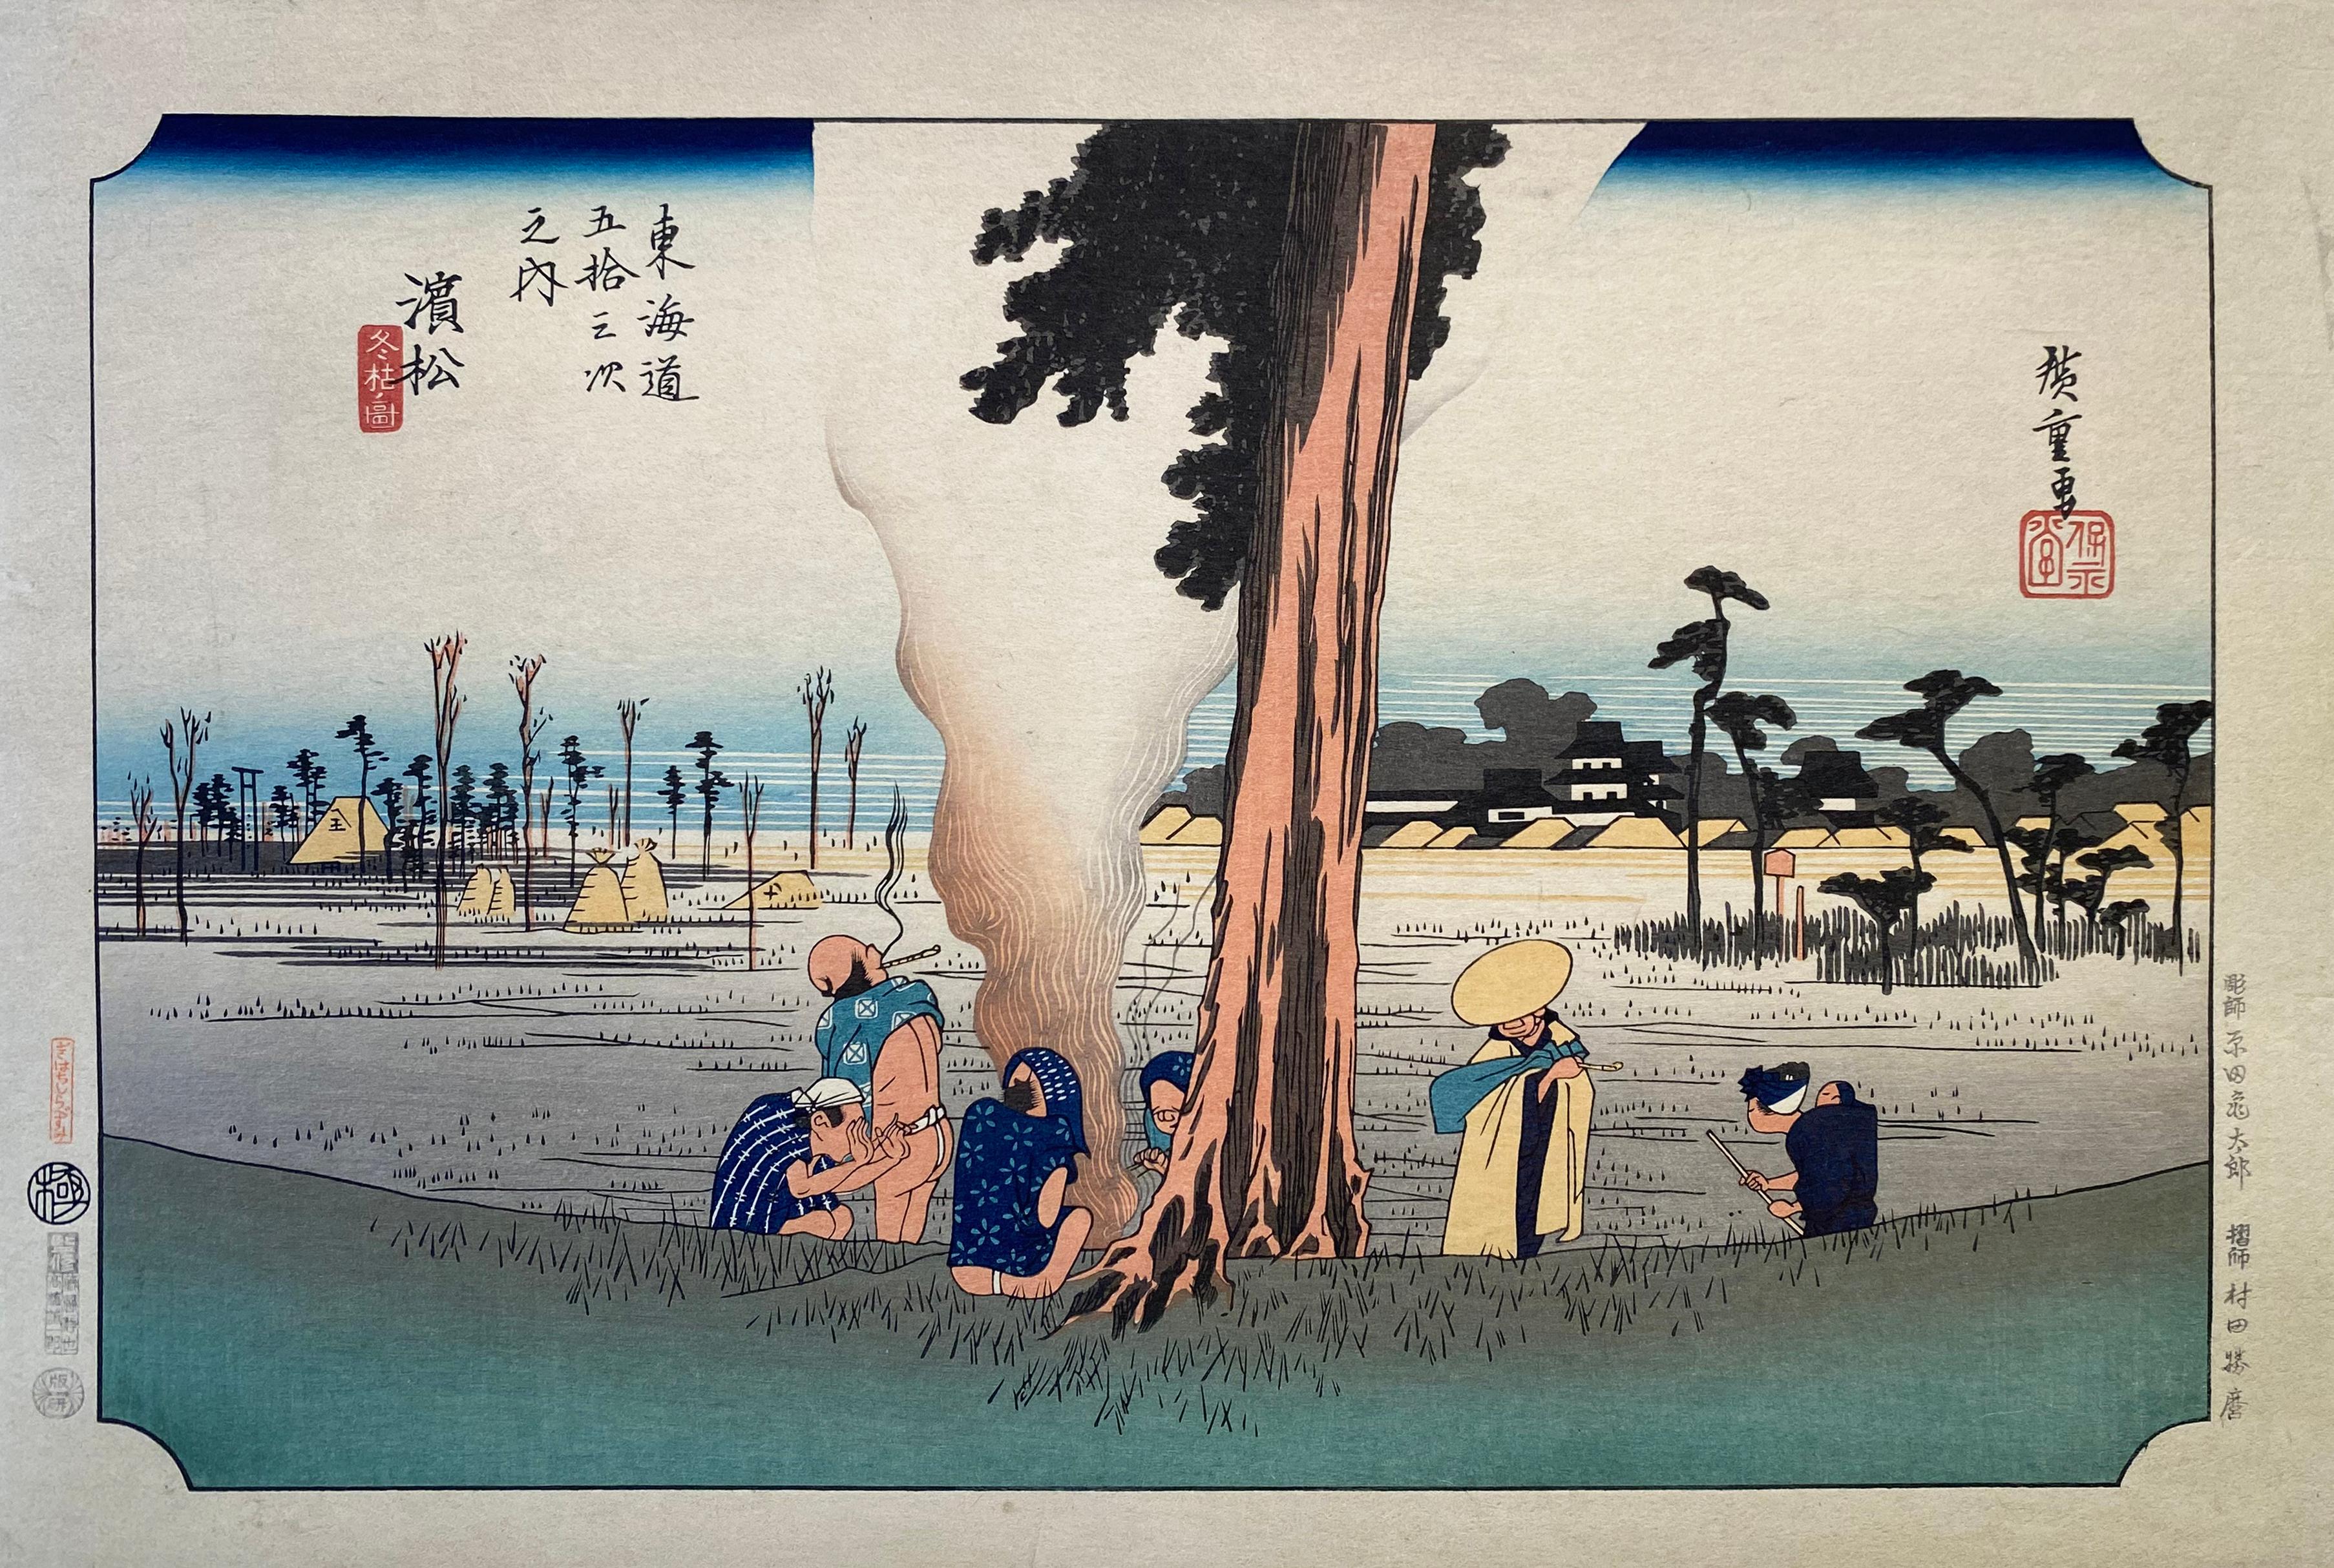 Ansicht von Hamamatsu", nach Utagawa Hiroshige 歌川廣重, Ukiyo-e Holzschnitt, Tokaido